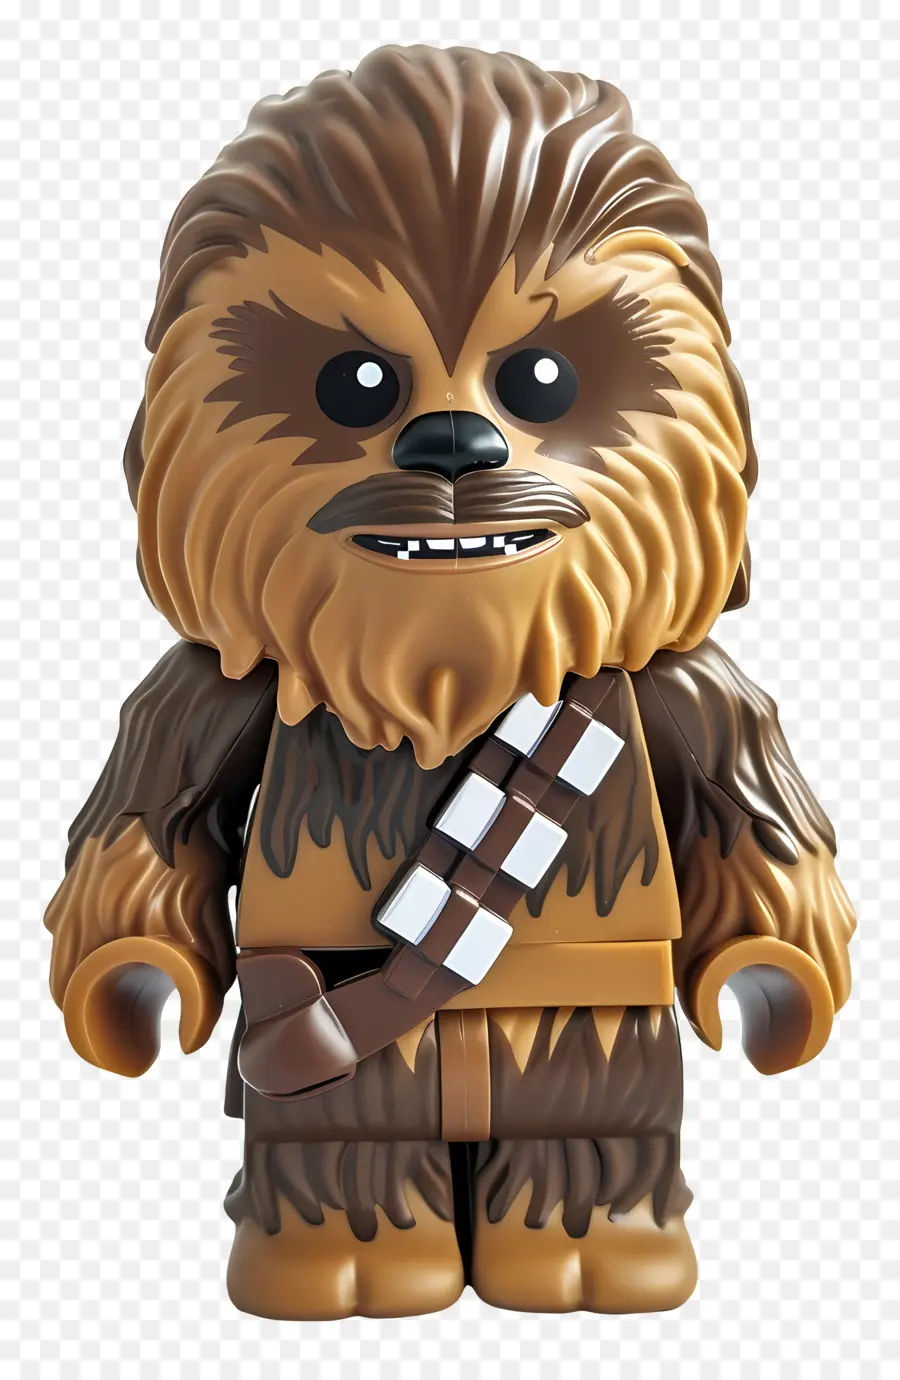 Guerre stellari - Chewbacca da Star Wars in bosco marrone